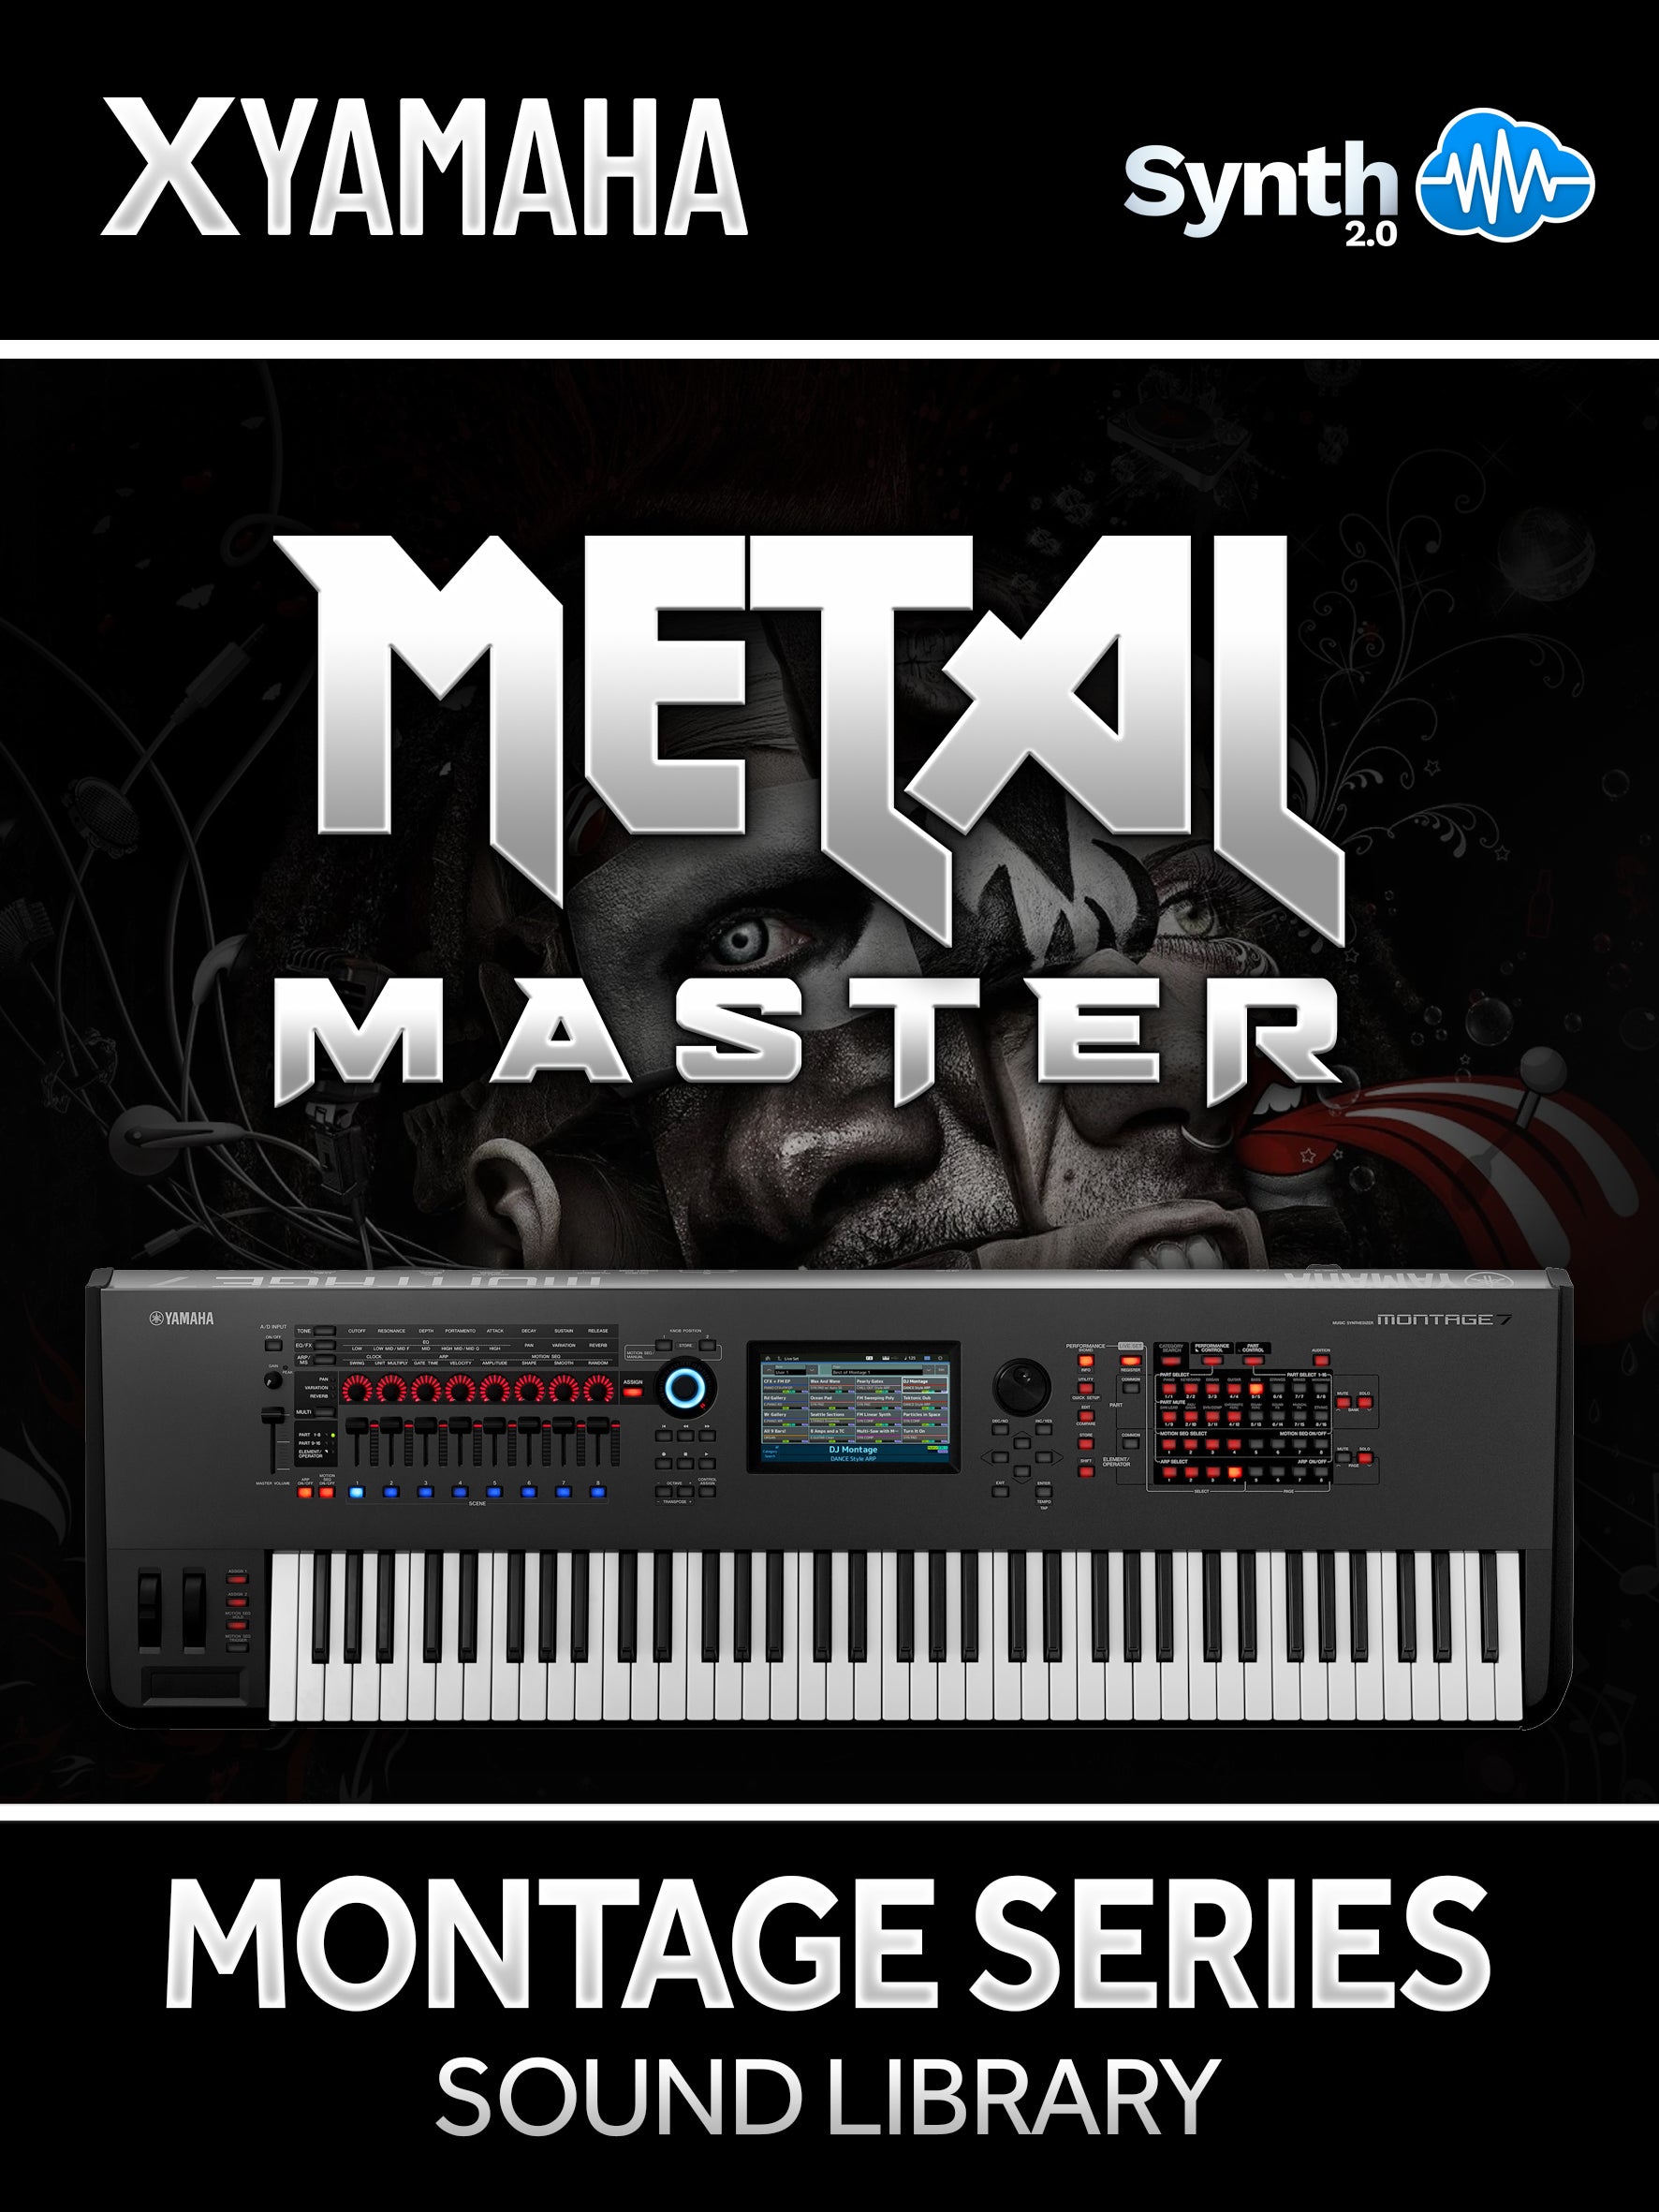 SWS038 - Metal Master - Yamaha MONTAGE / M ( 30 sounds )